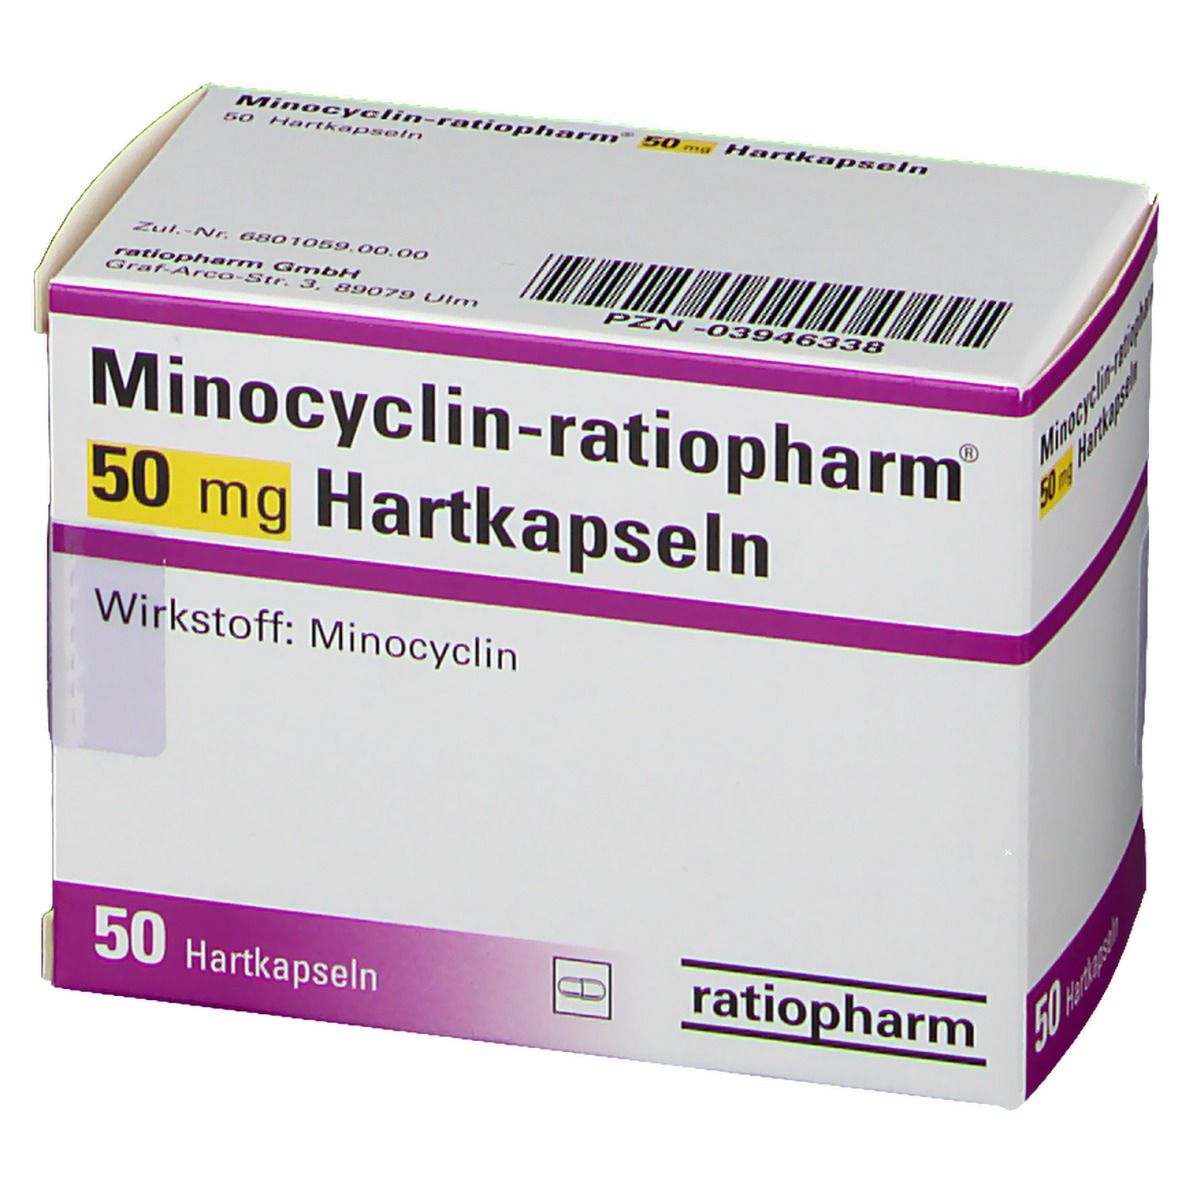 Minocyclin-ratiopharm 50 mg